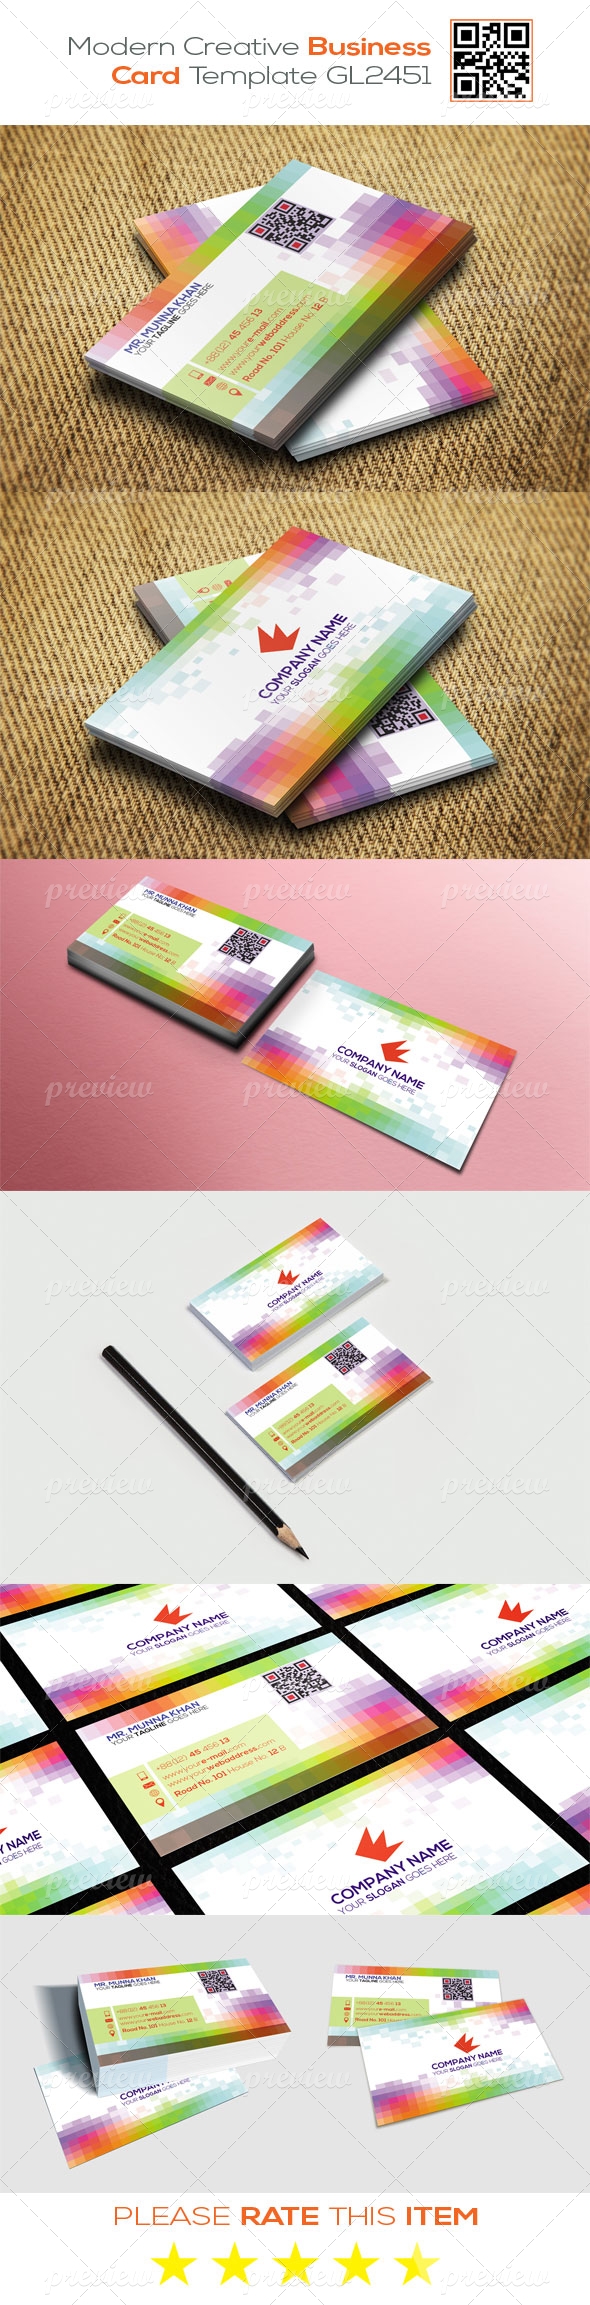 Modern Creative Business Card Template GL2451